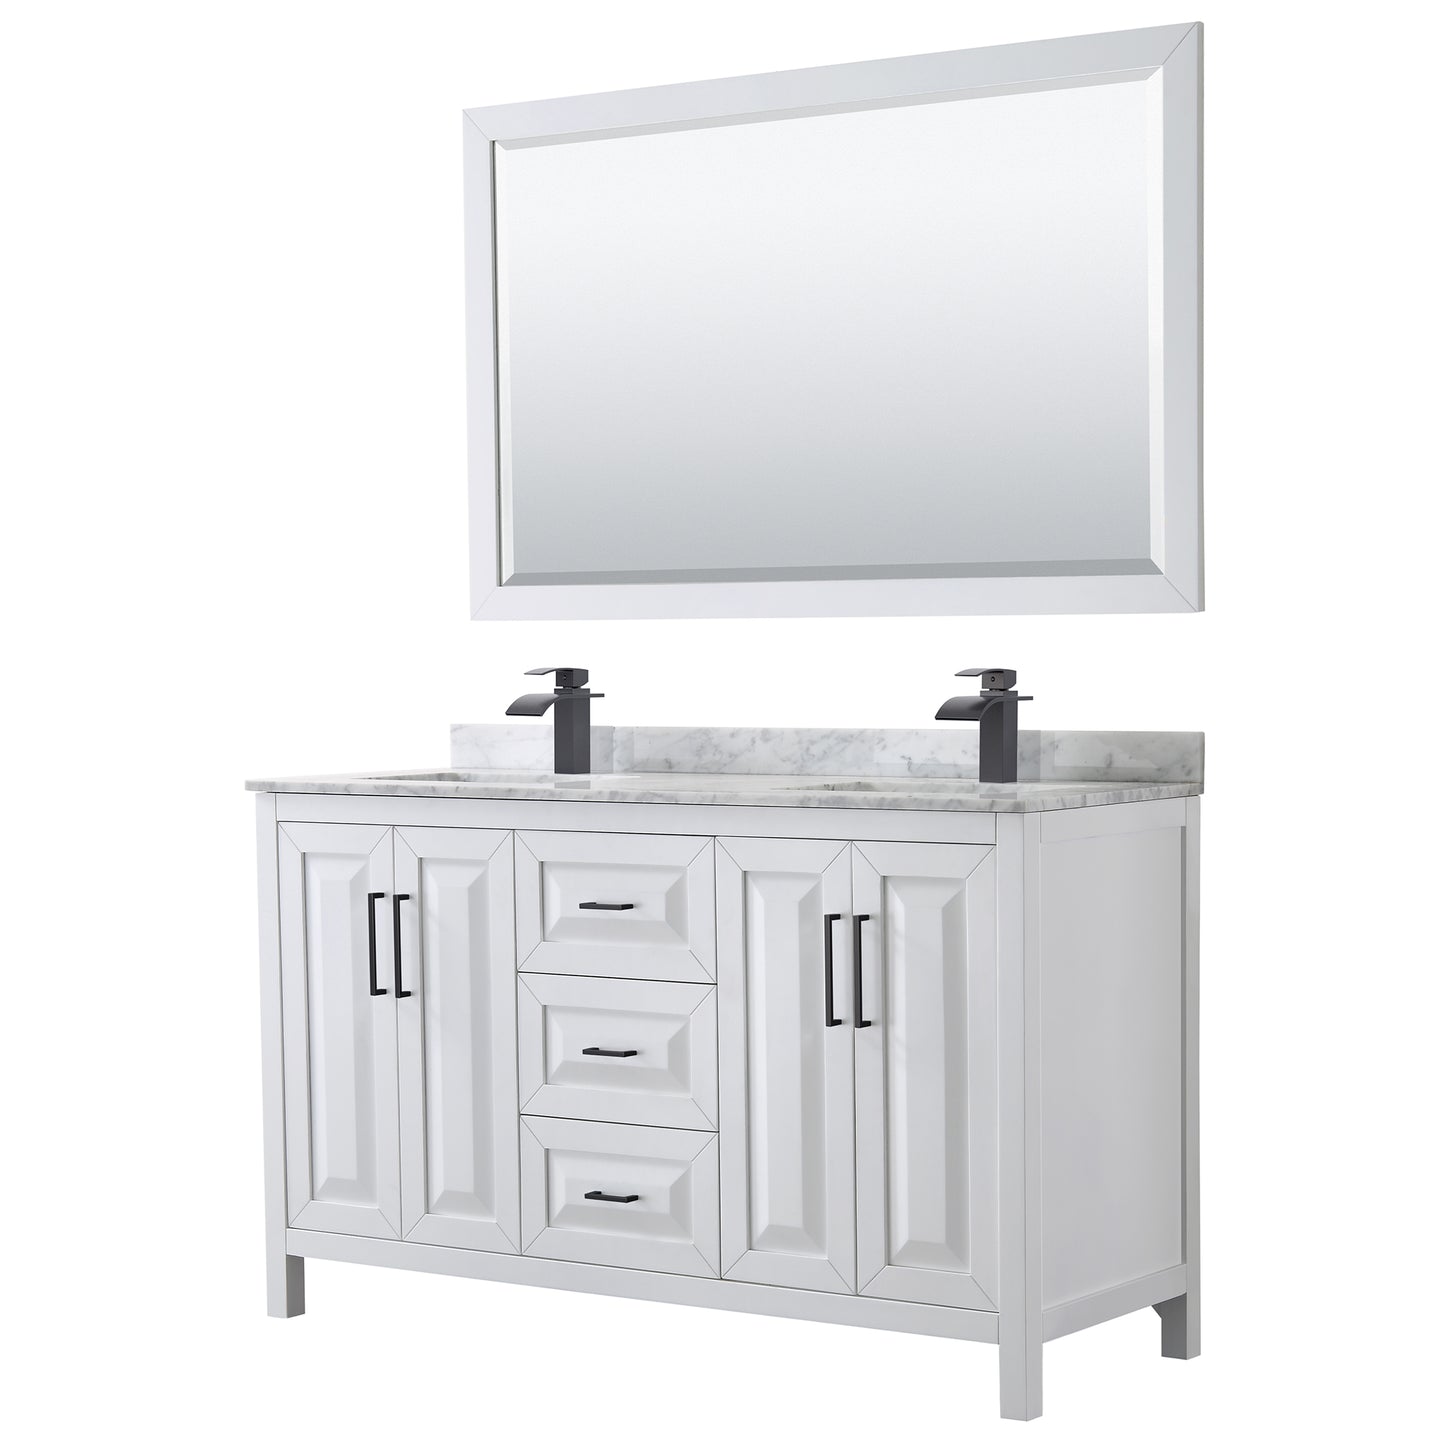 Wyndham Daria 60 Inch Double Bathroom Vanity White Carrara Marble Countertop, Undermount Square Sinks in Matte Black Trim with 58 Inch Mirror - Luxe Bathroom Vanities